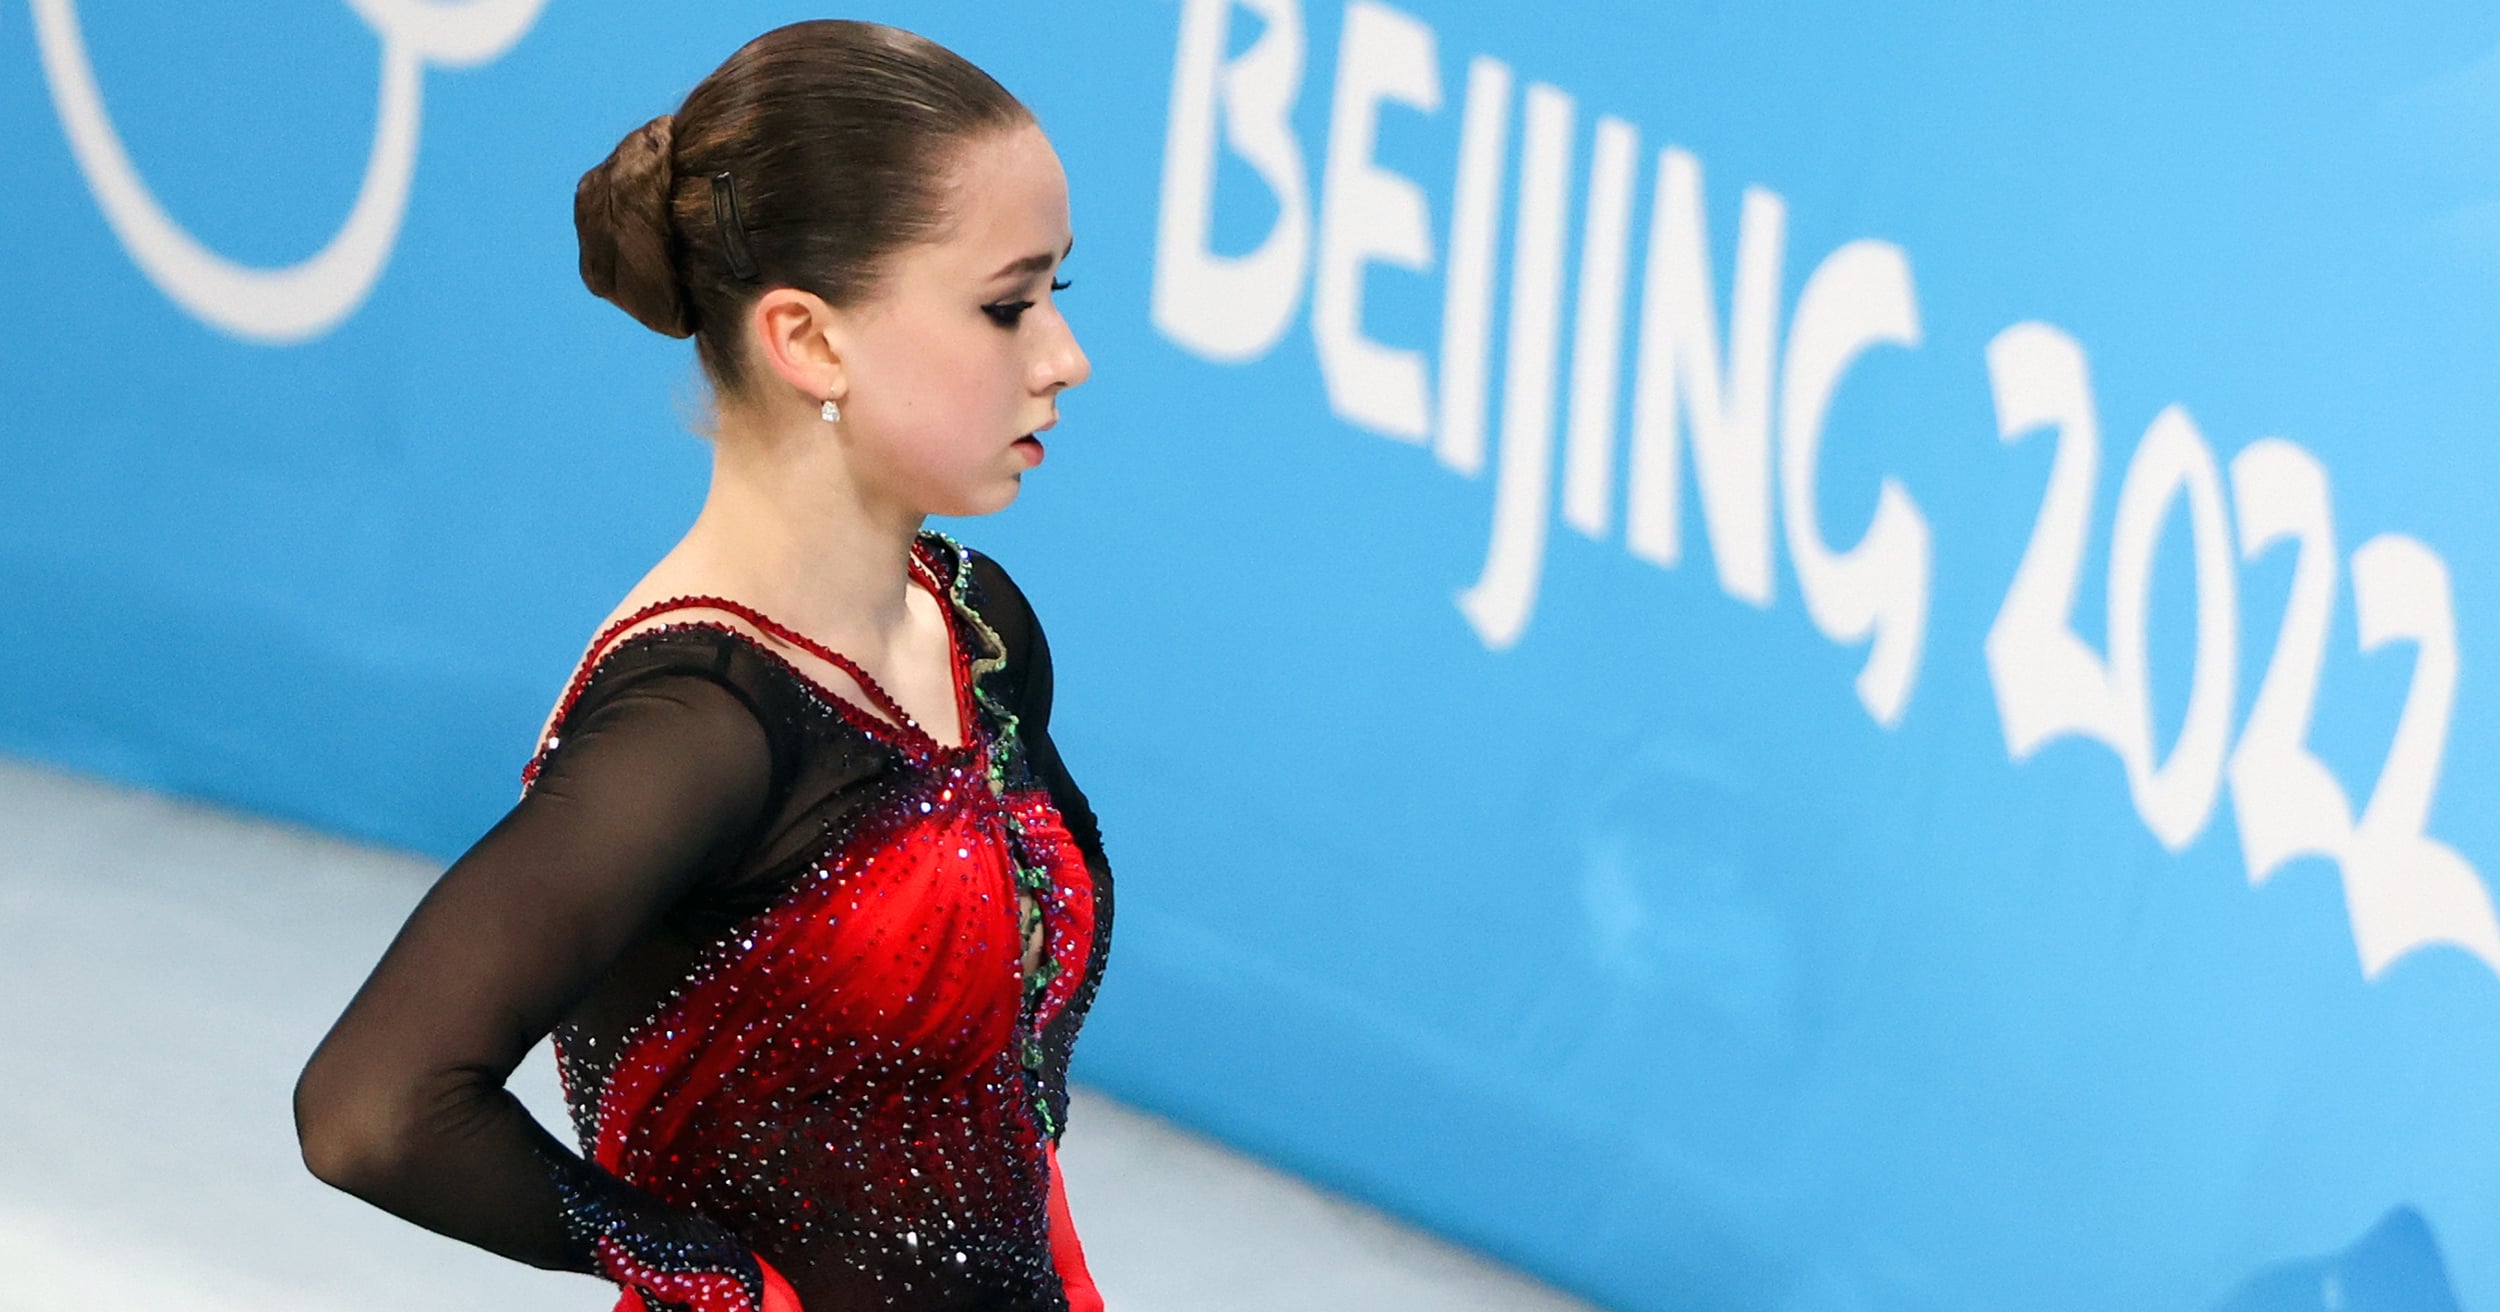 Kamila Valieva Is Fourth In Beijing Olympics Figure Skating Popsugar